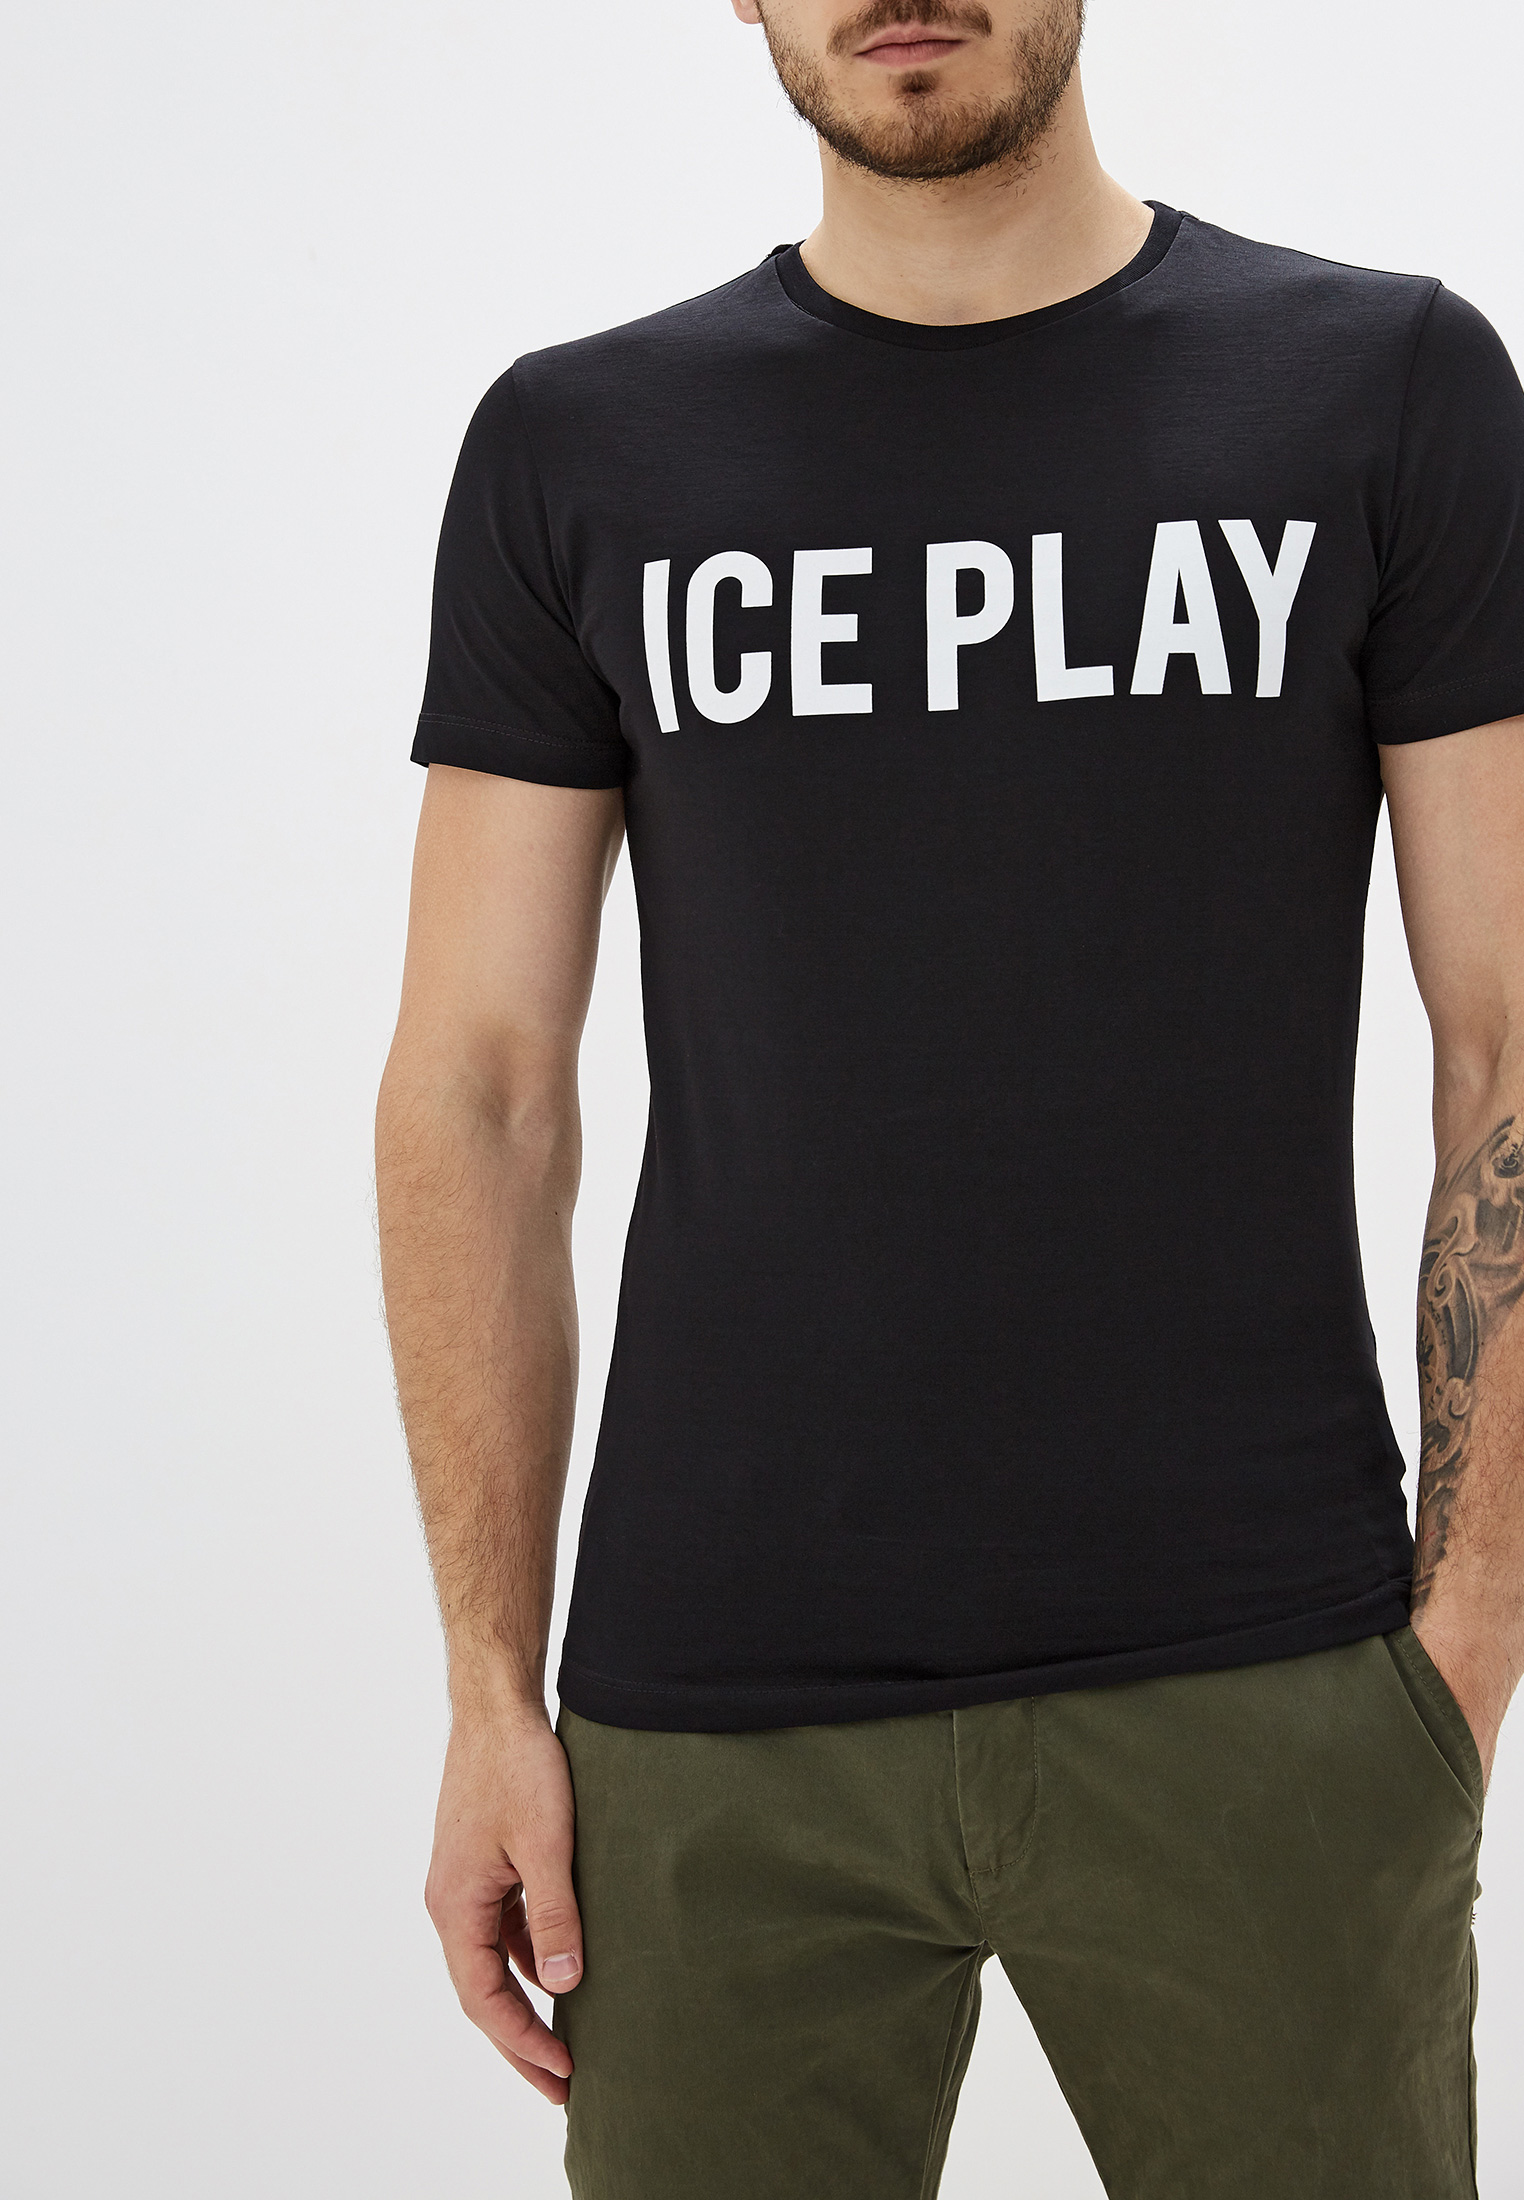 Одежда айс. Футболка Ice Play. Ice Play футболка мужская. Футболка Ice Play черный. Ice Play футболка ламода.